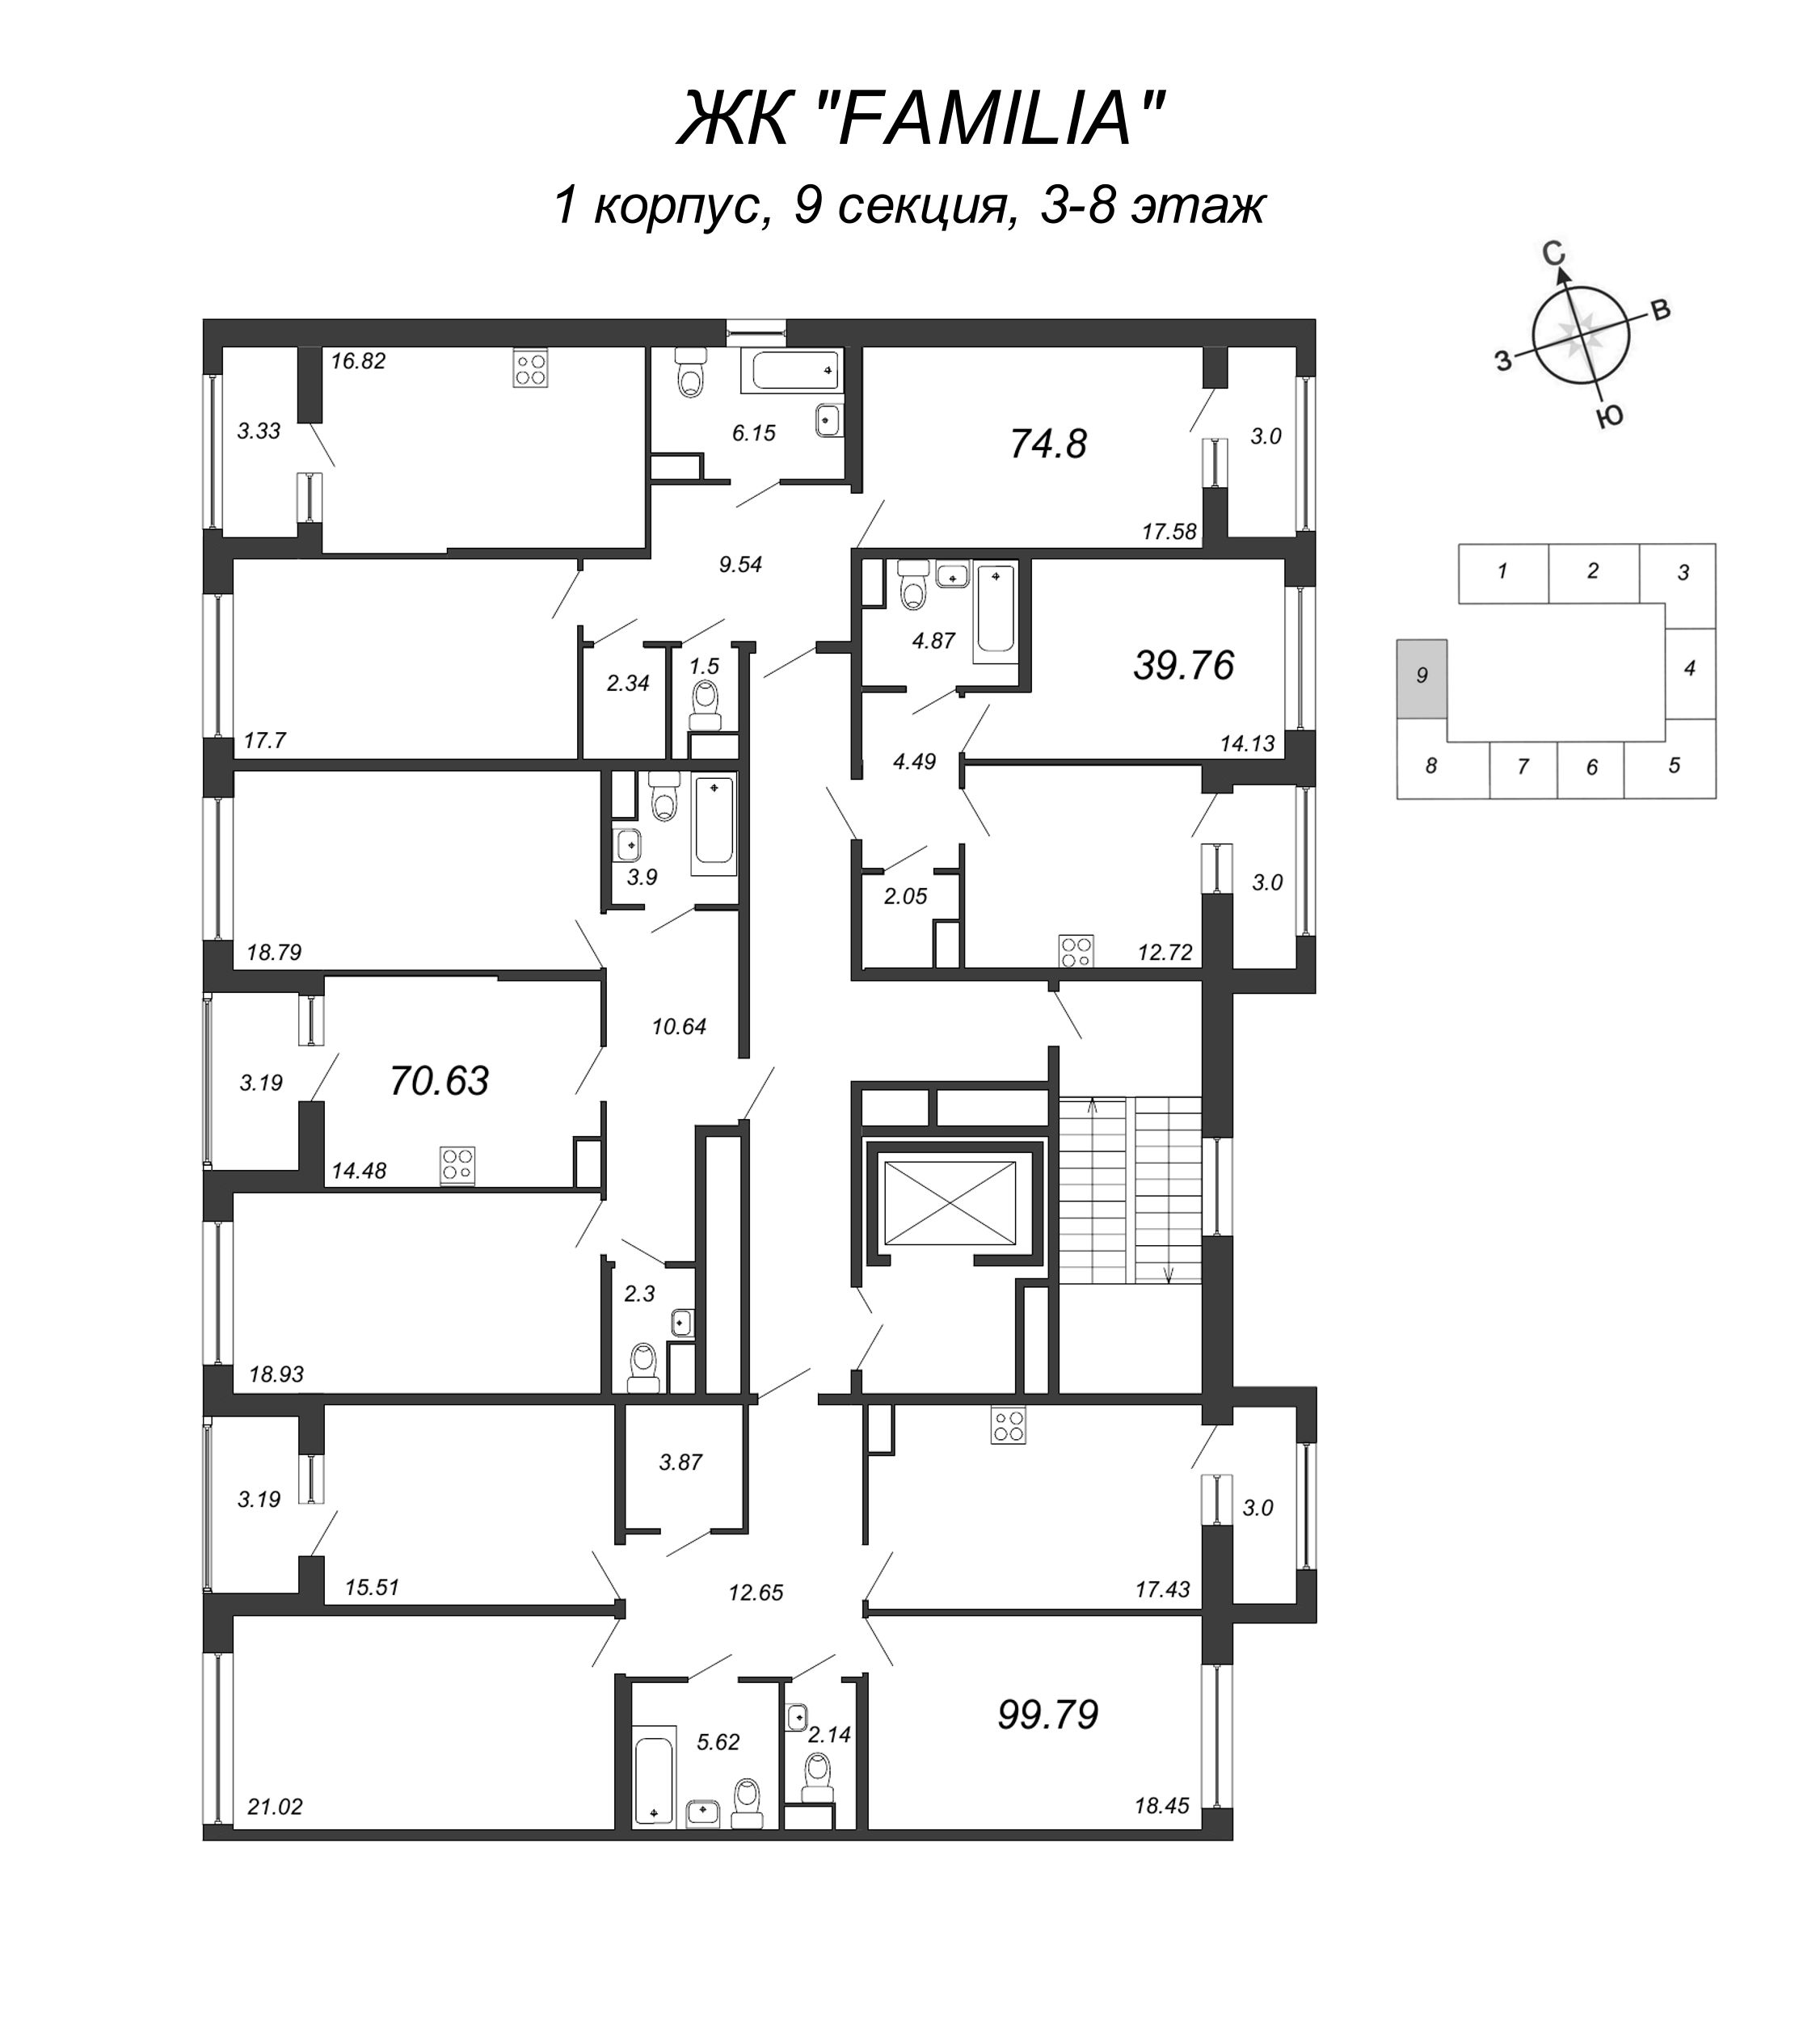 1-комнатная квартира, 39.3 м² в ЖК "FAMILIA" - планировка этажа